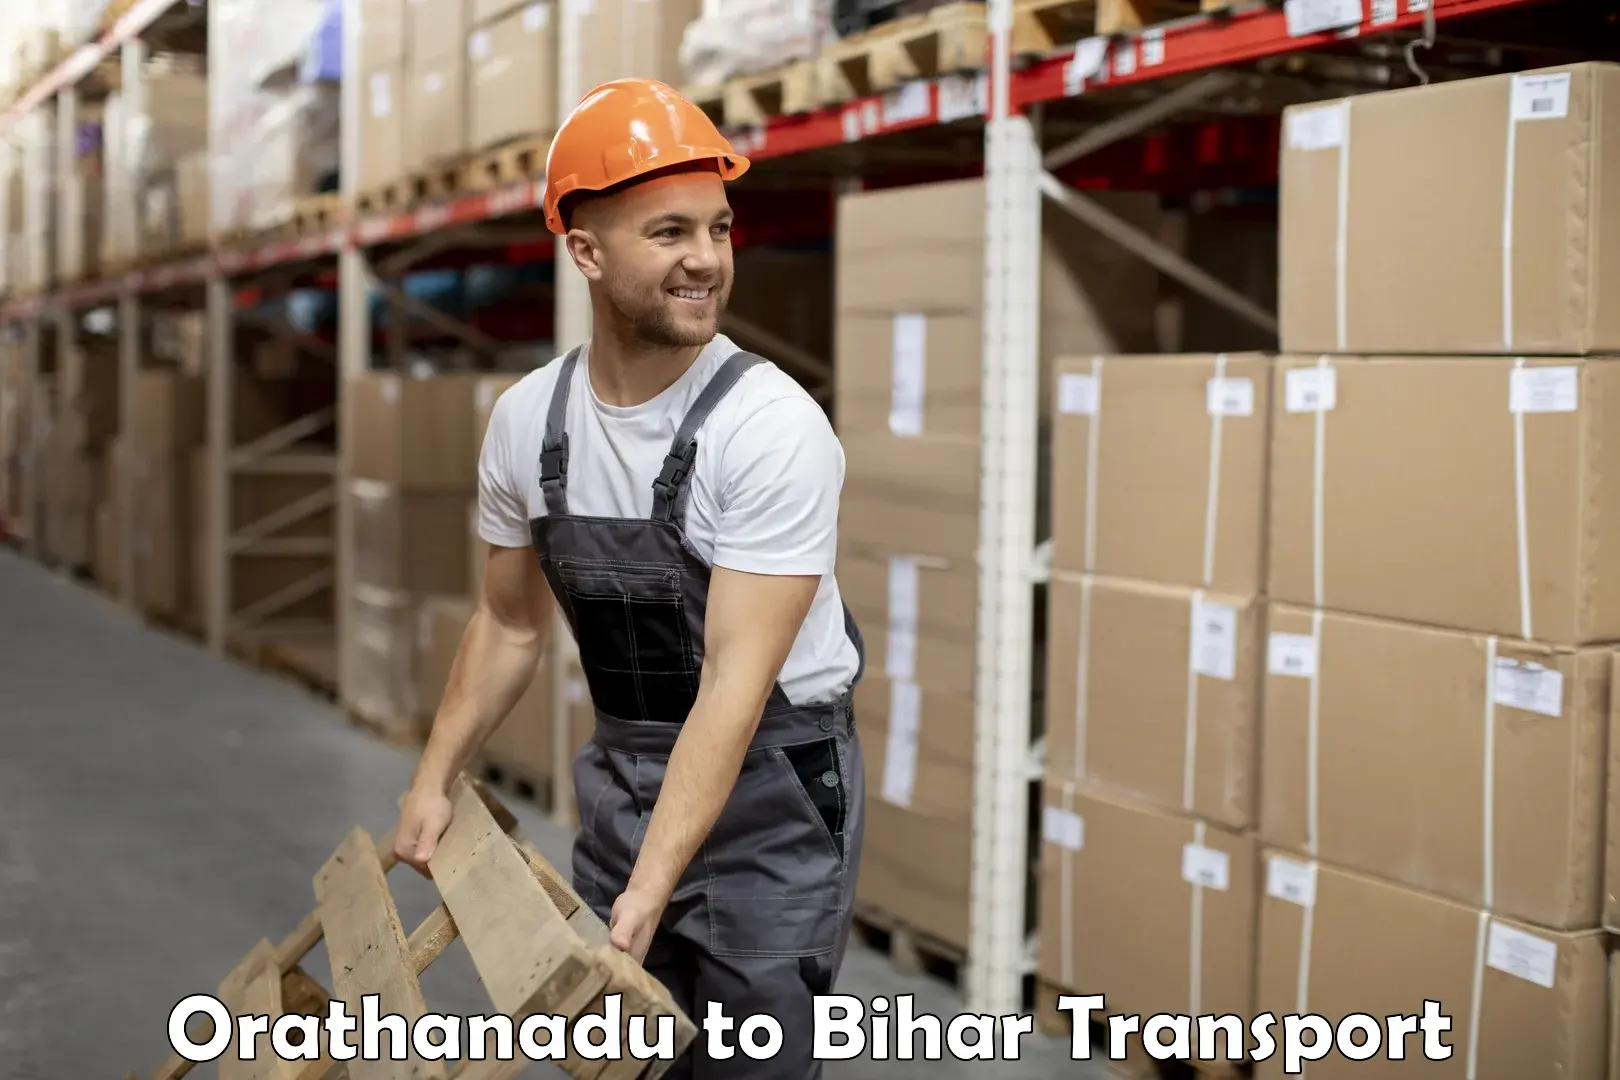 Goods delivery service Orathanadu to Minapur